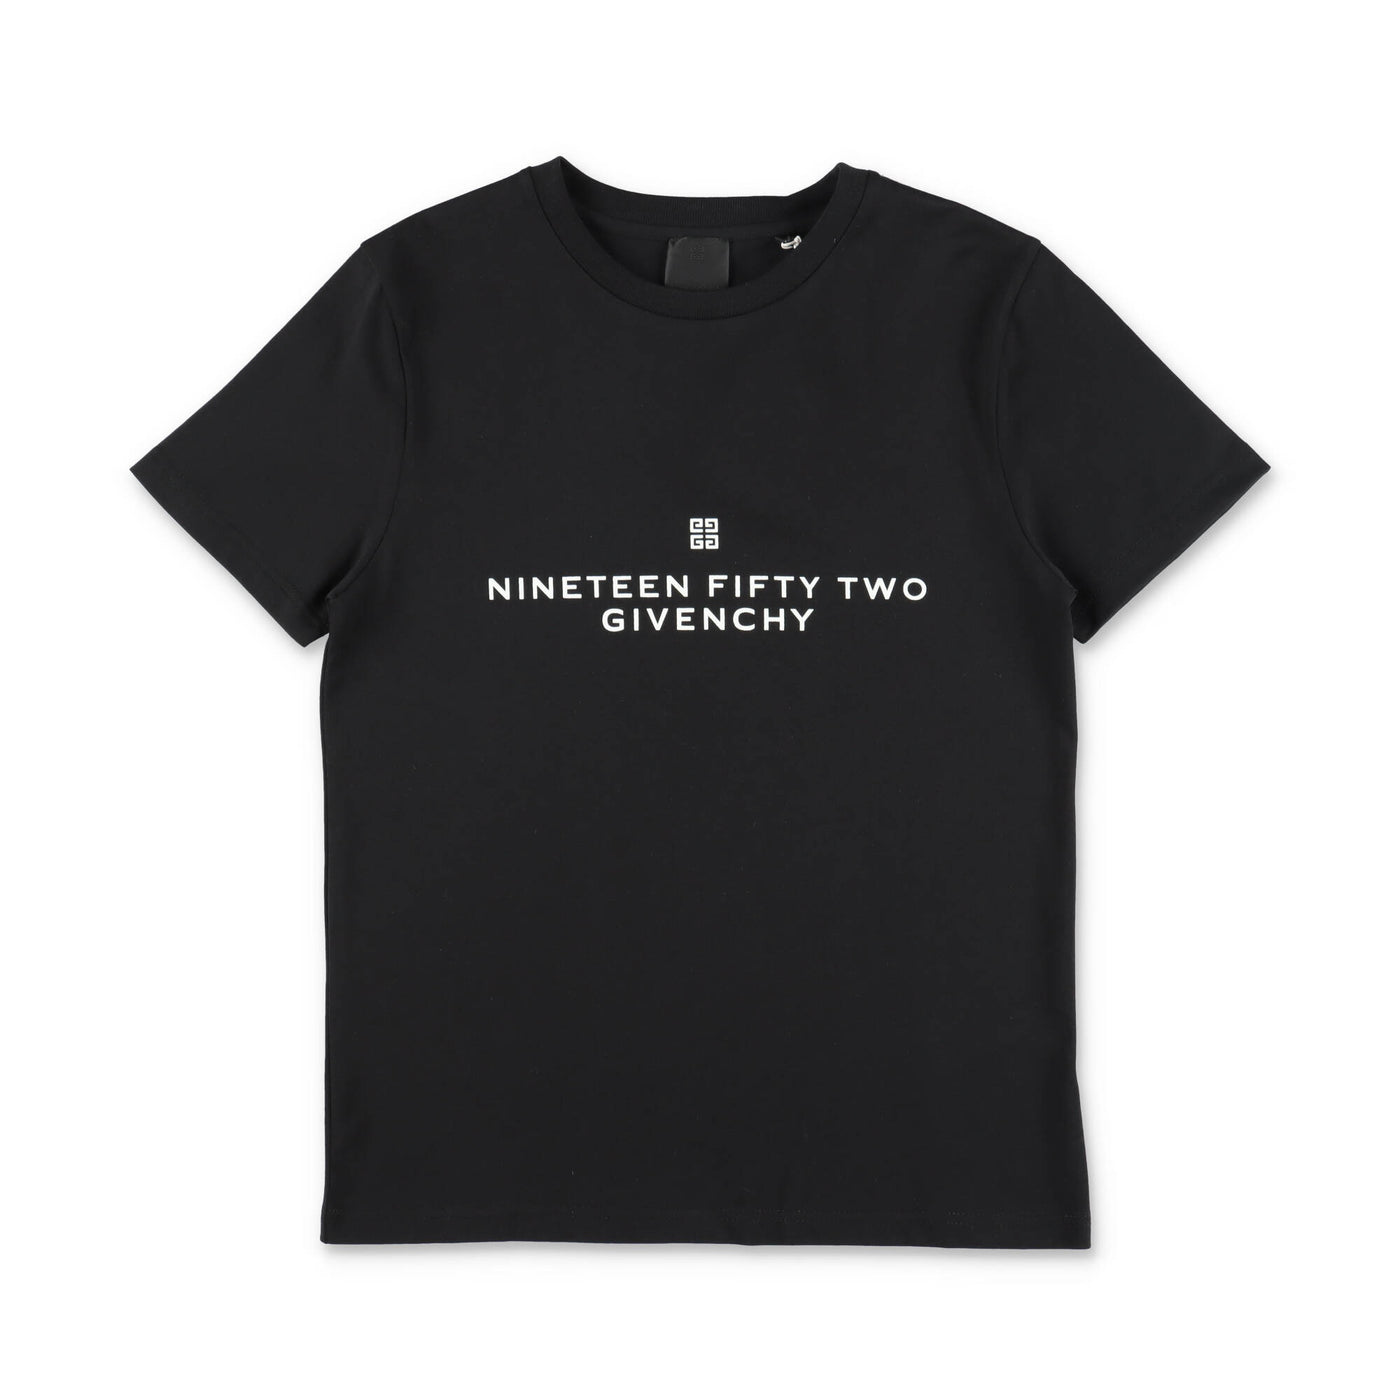 Black cotton jersey boy GIVENCHY t-shirt